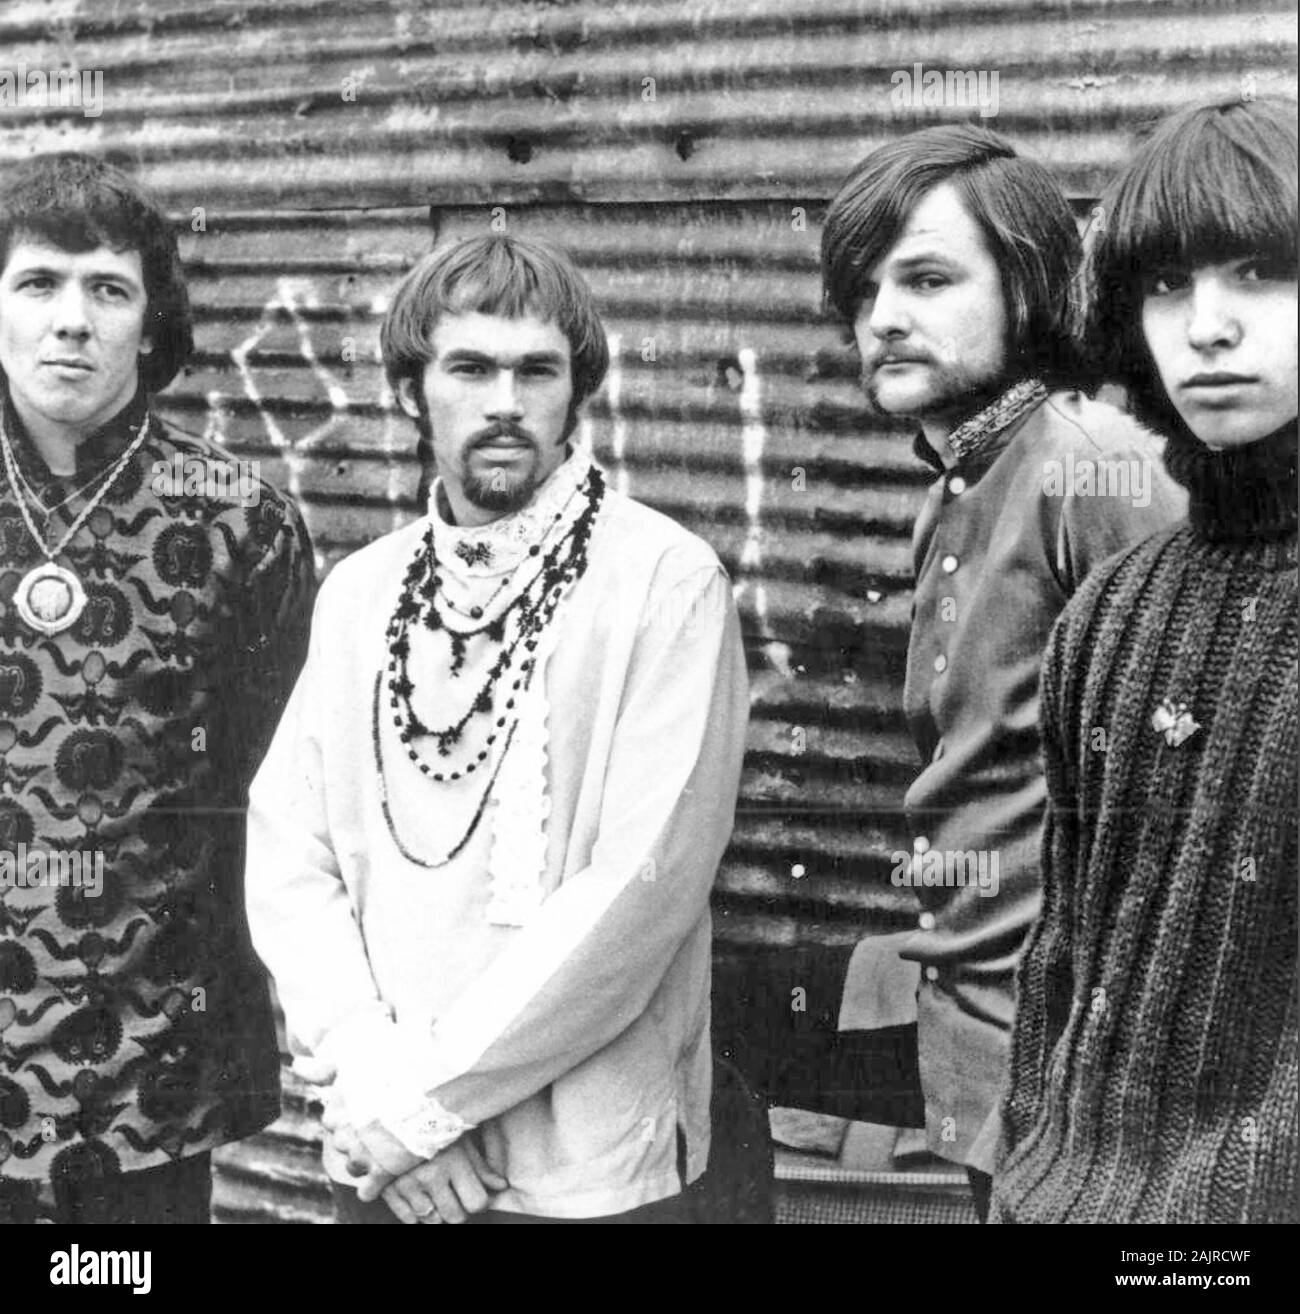 IRON BUTTERFLY Promotional photo of American rock group in 1969. From left: Doug Ingle, Ron Bushy, Lee Dorman, Erik Braunn Stock Photo